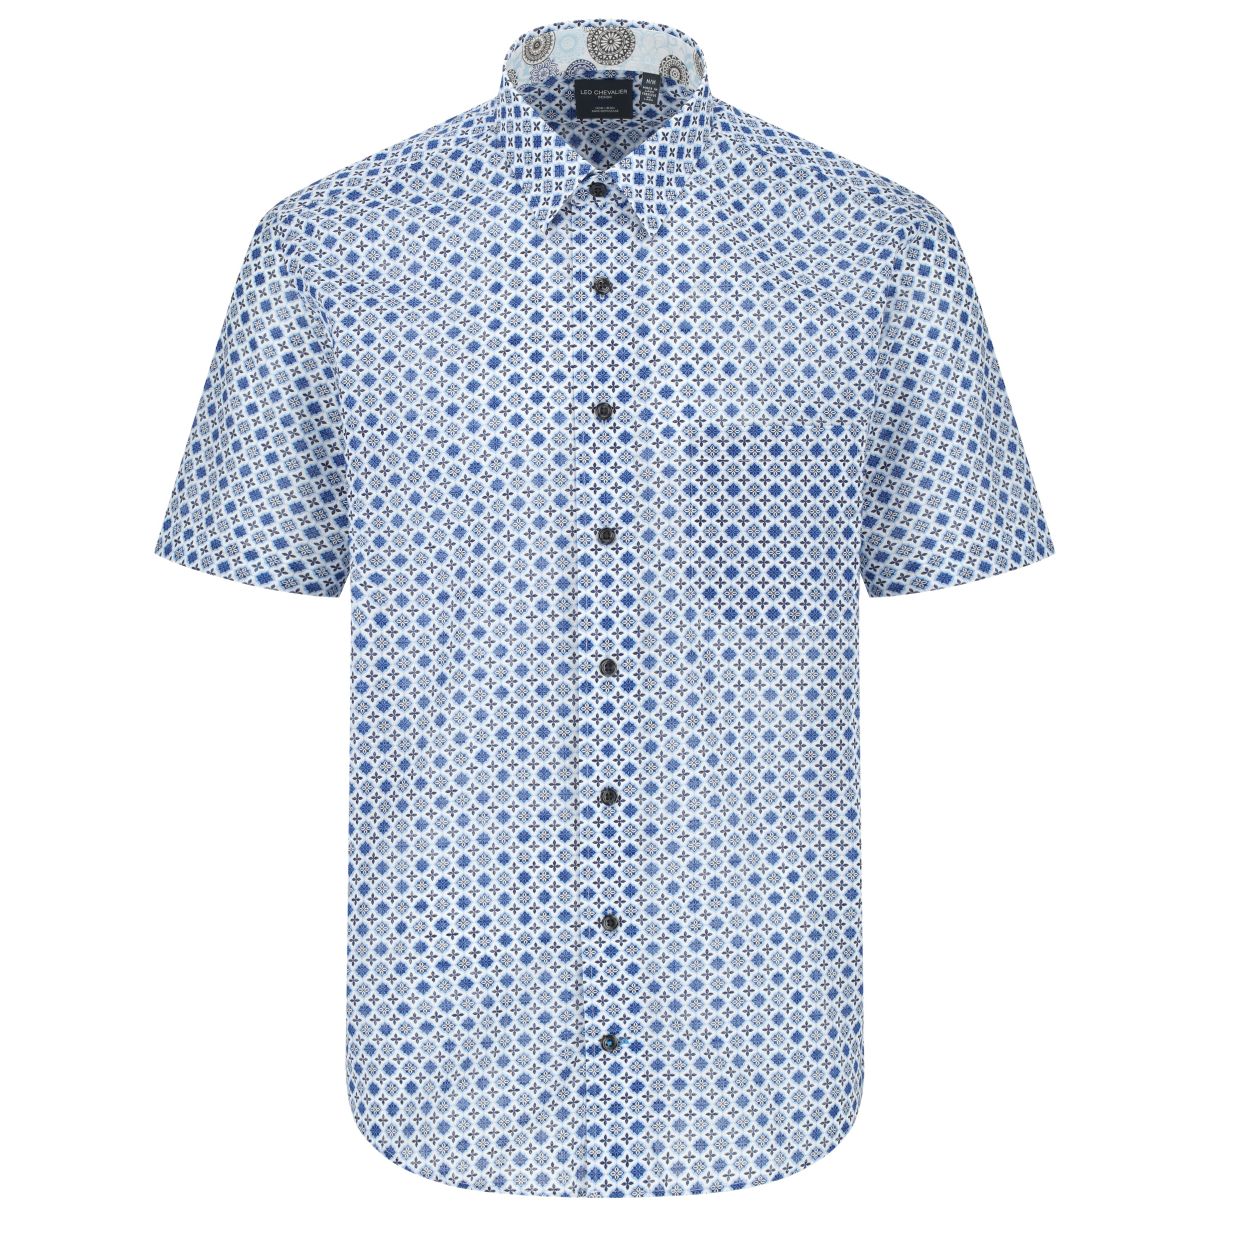 Blue Neat Geometric Print Short Sleeve No-Iron Cotton Sport Shirt with Hidden Button Down Collar by Leo Chevalier